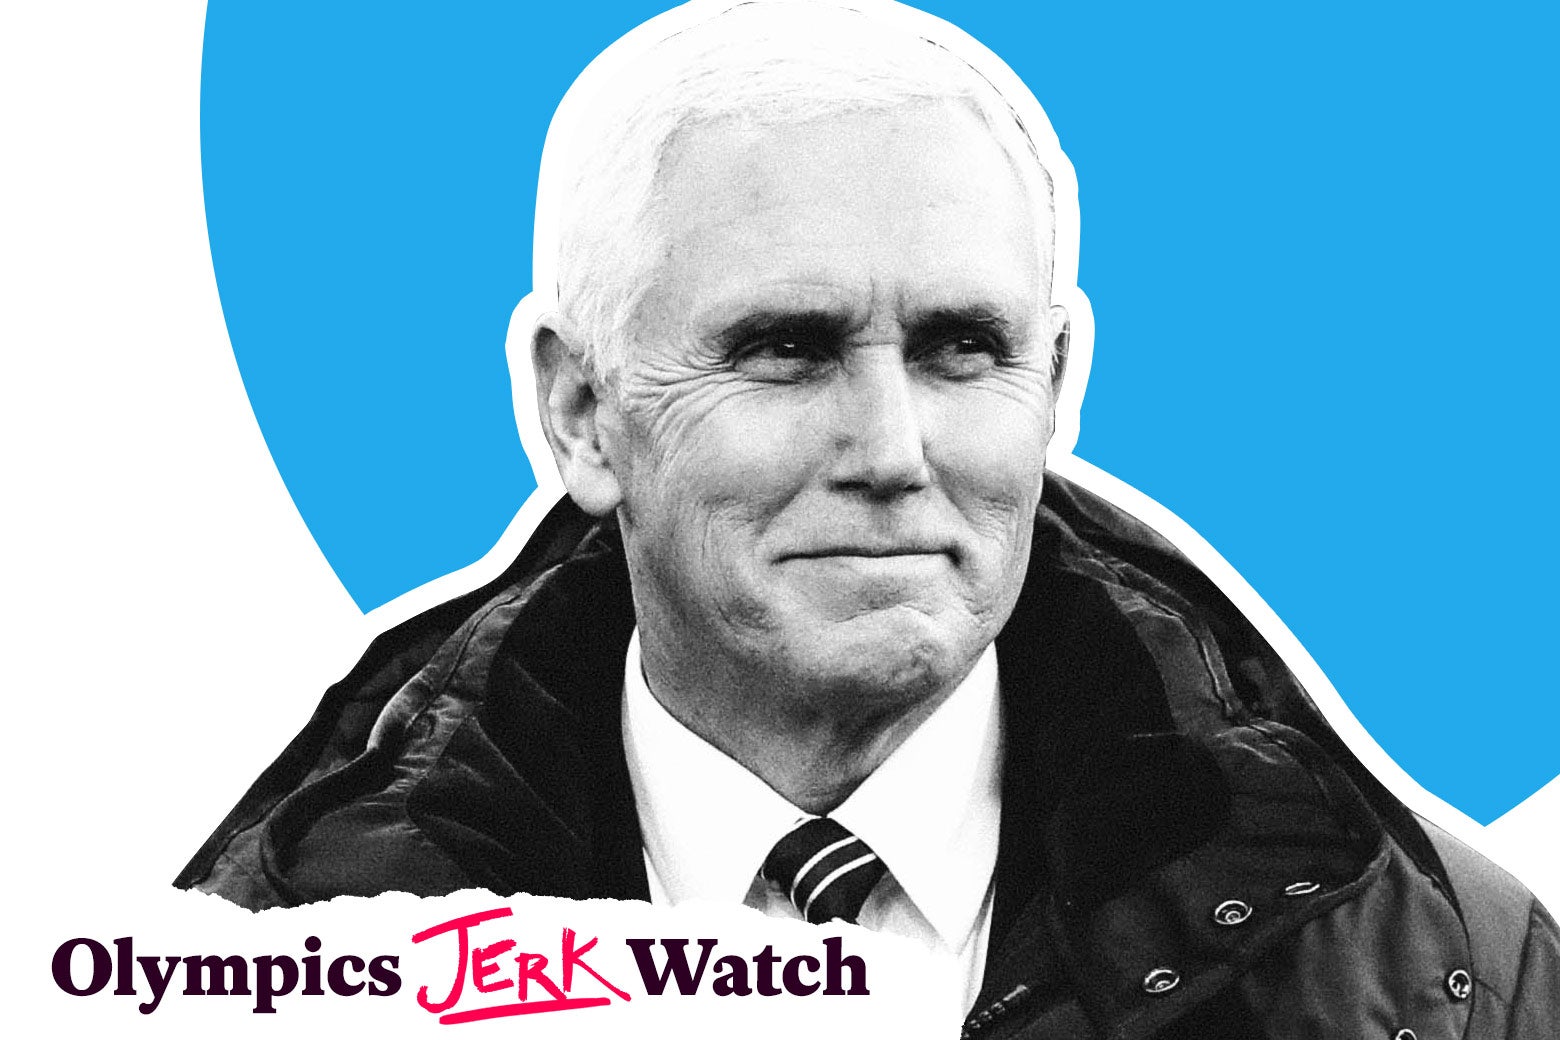 Mike Pence, plus the Olympics Jerk Watch logo.